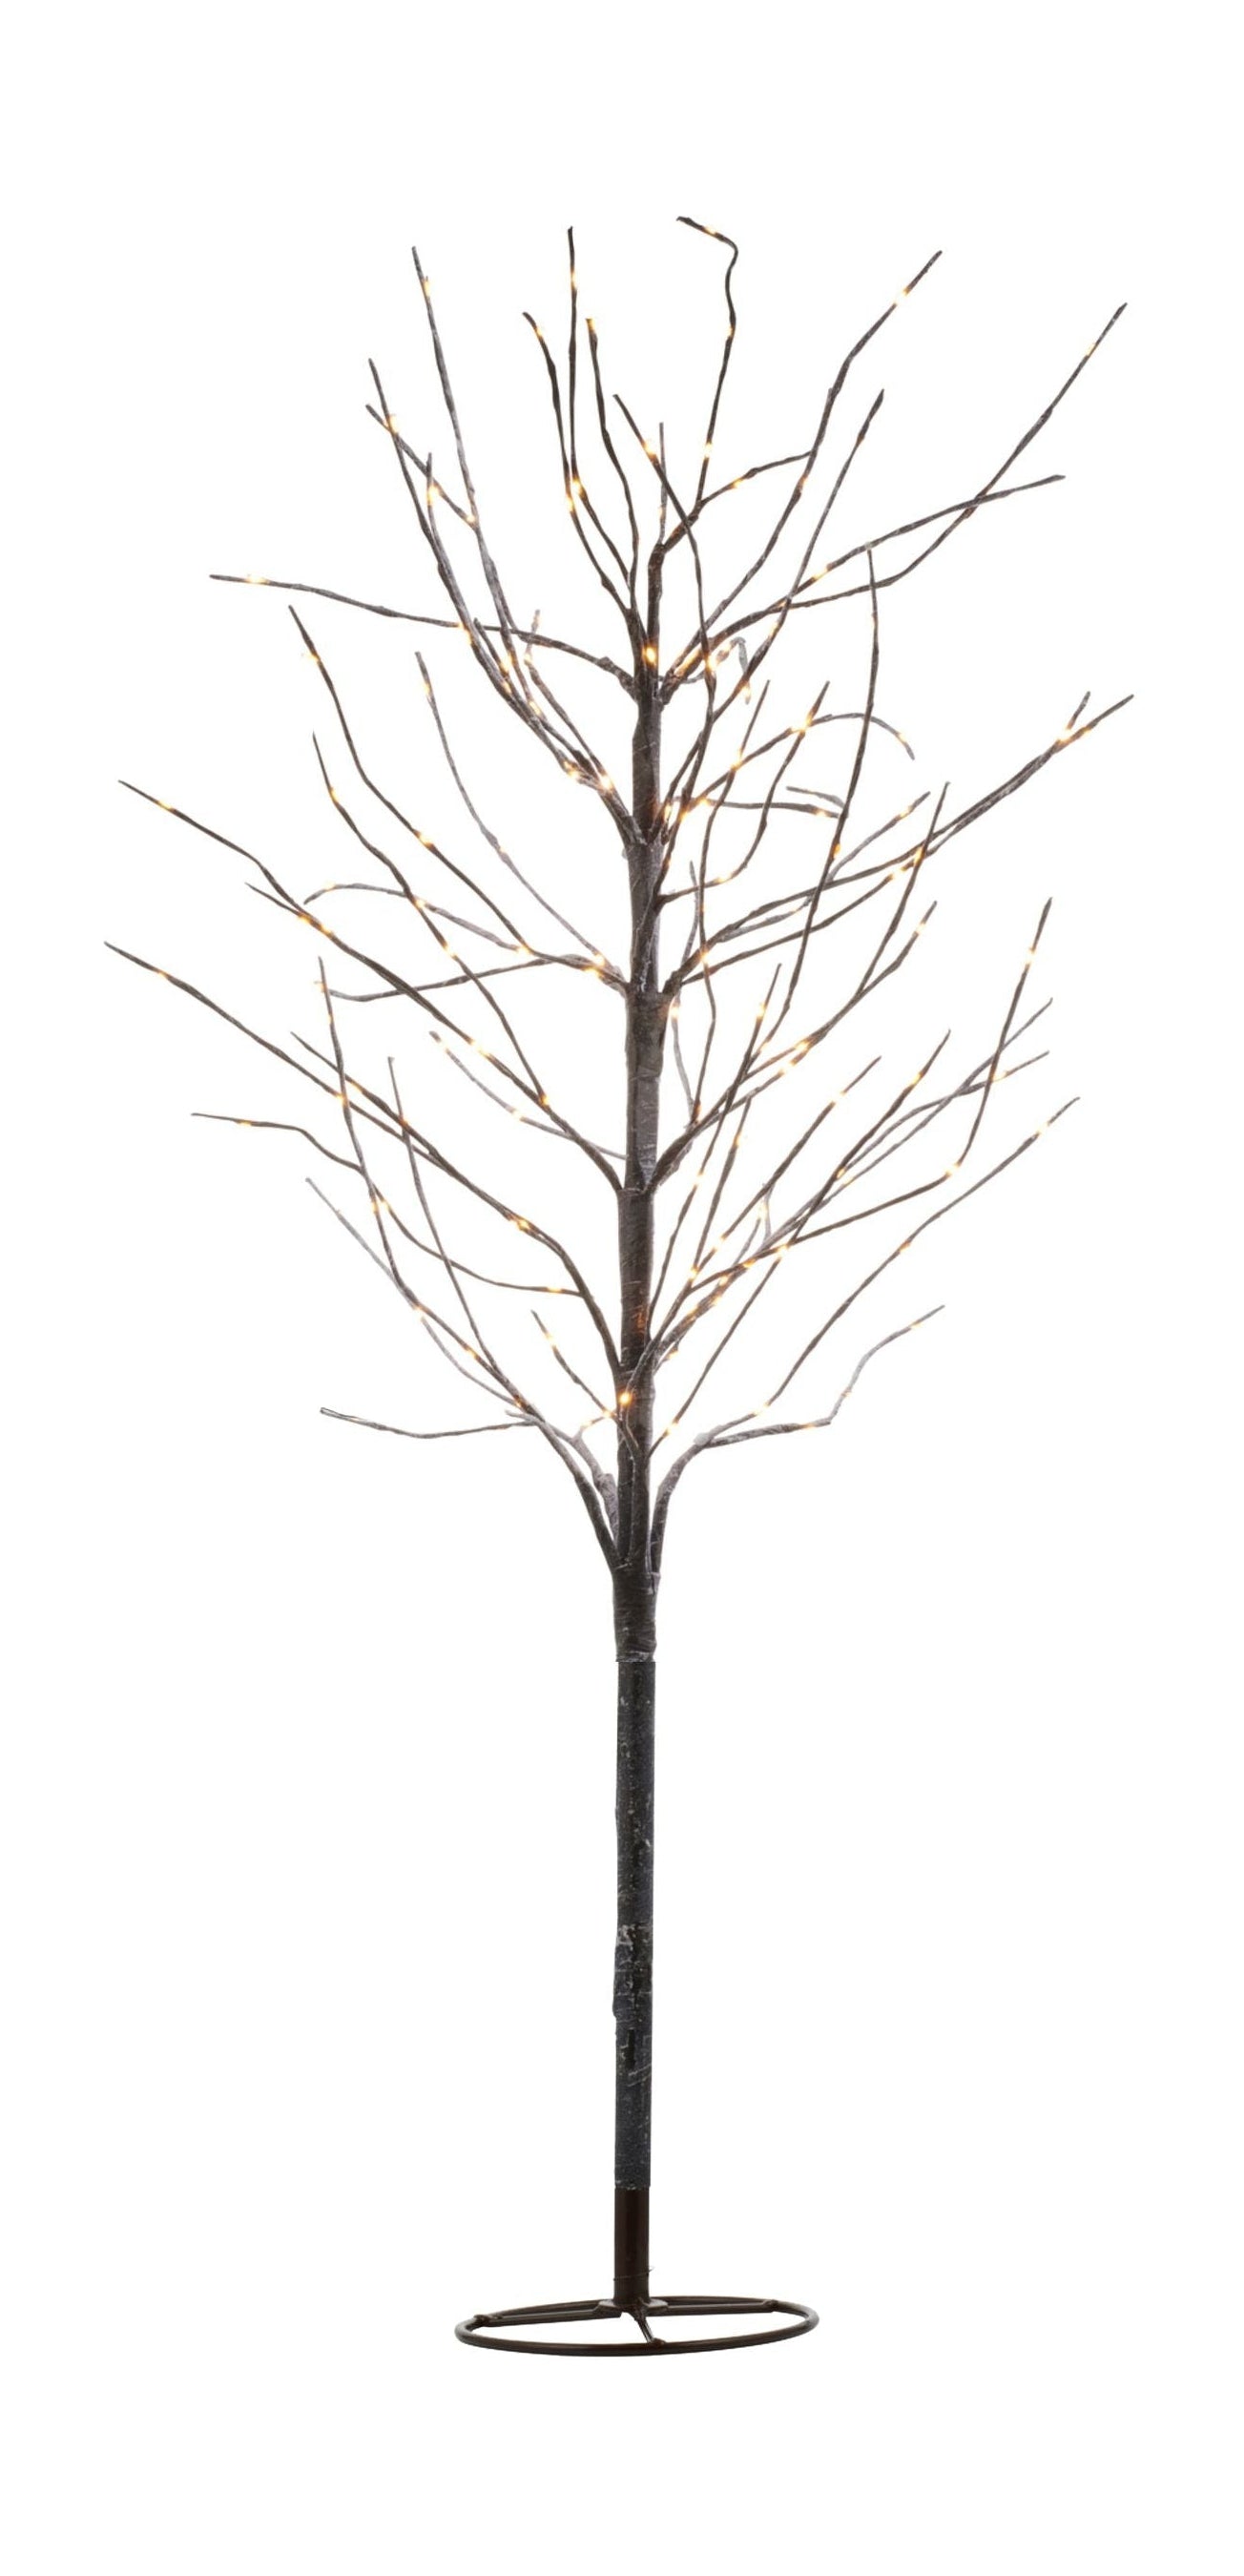 Sirius Kira Tree 160 le ds H1,2m Ø40cm+5m, marrón/nieve